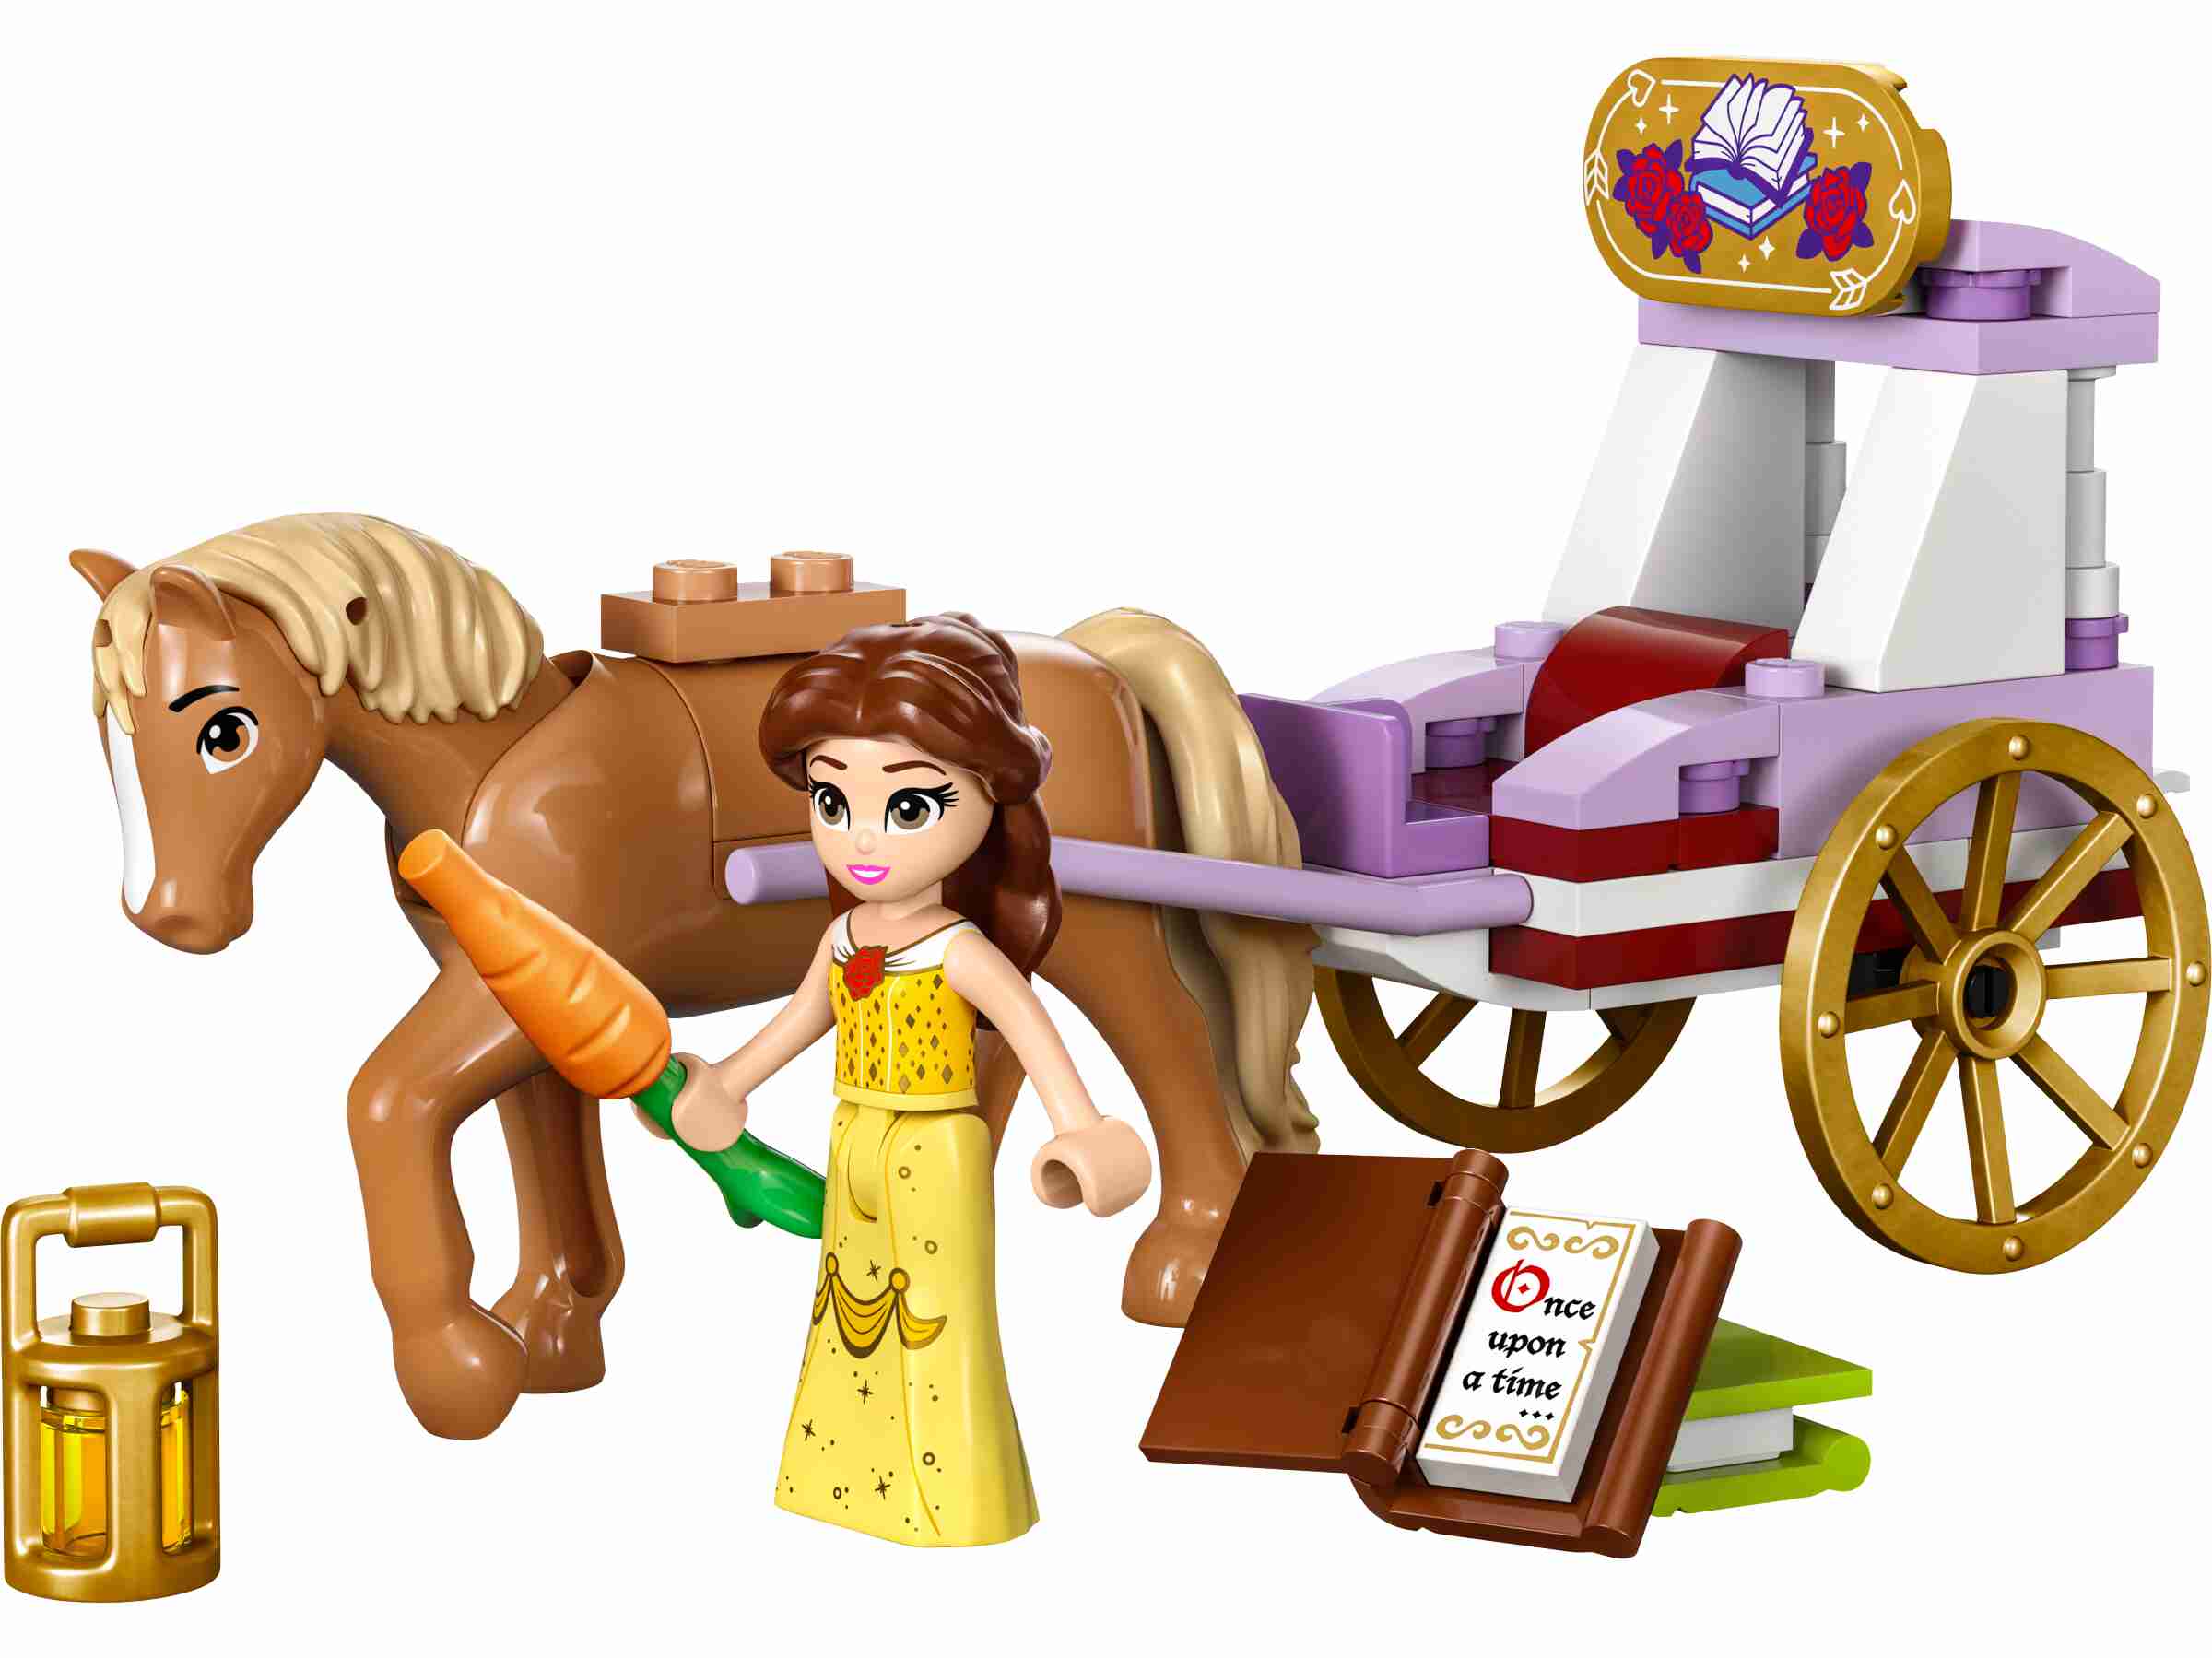 LEGO 43233 Disney Princess Belles Pferdekutsche, Spielfigur Belle Pferd Philippe